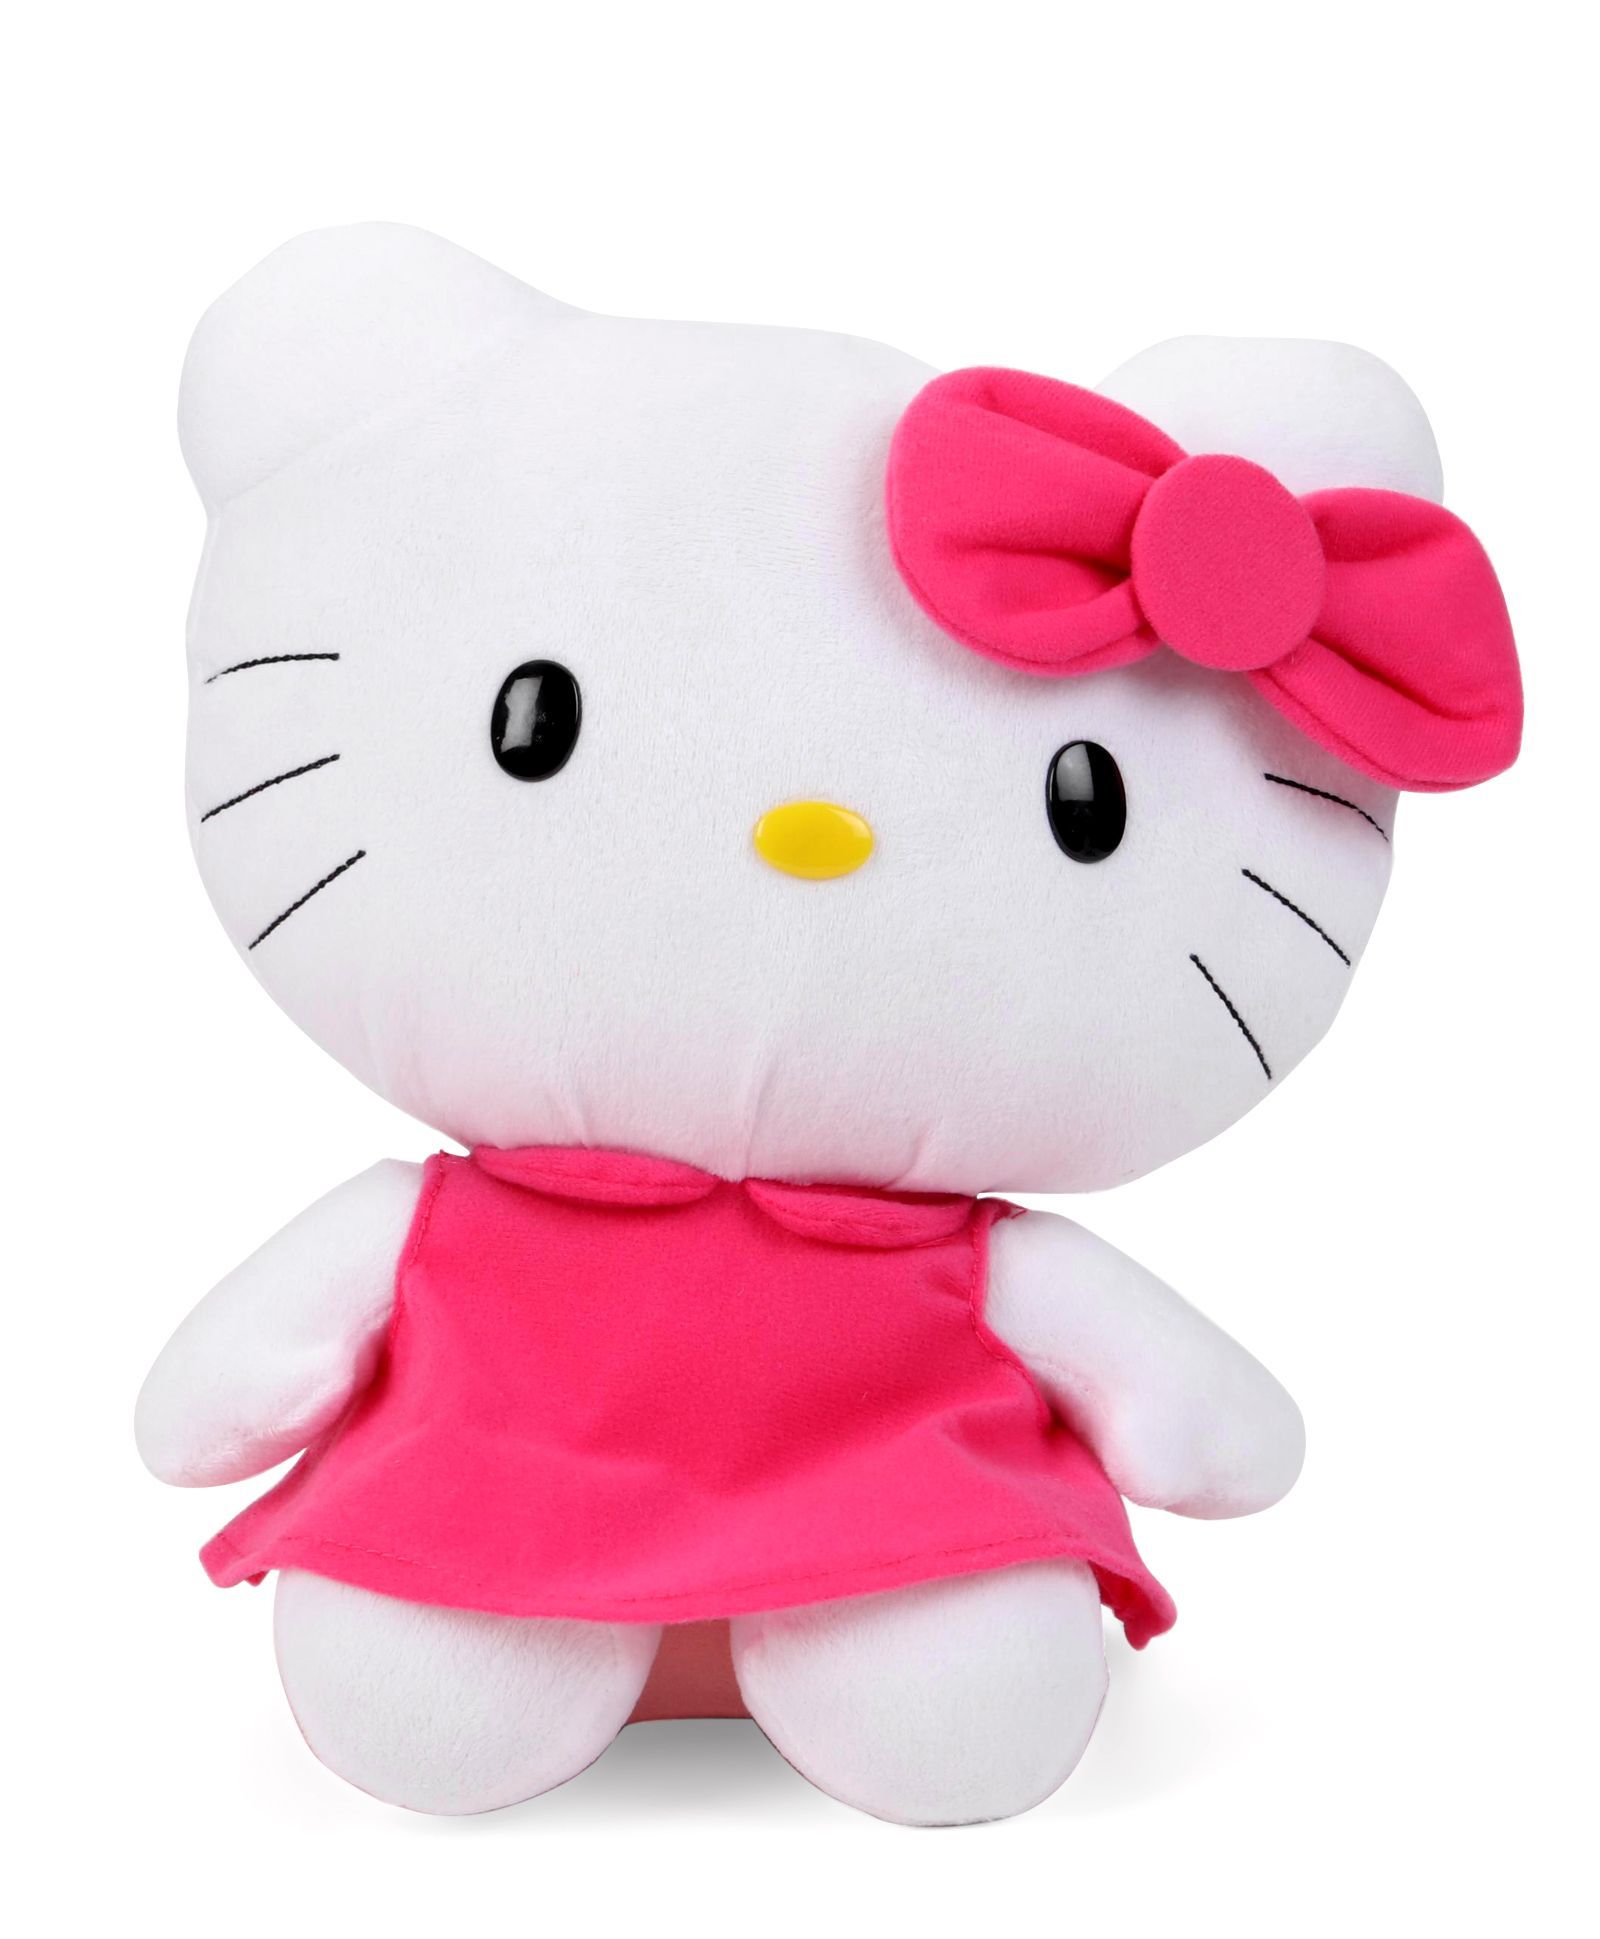 pink kitty stuffed animal